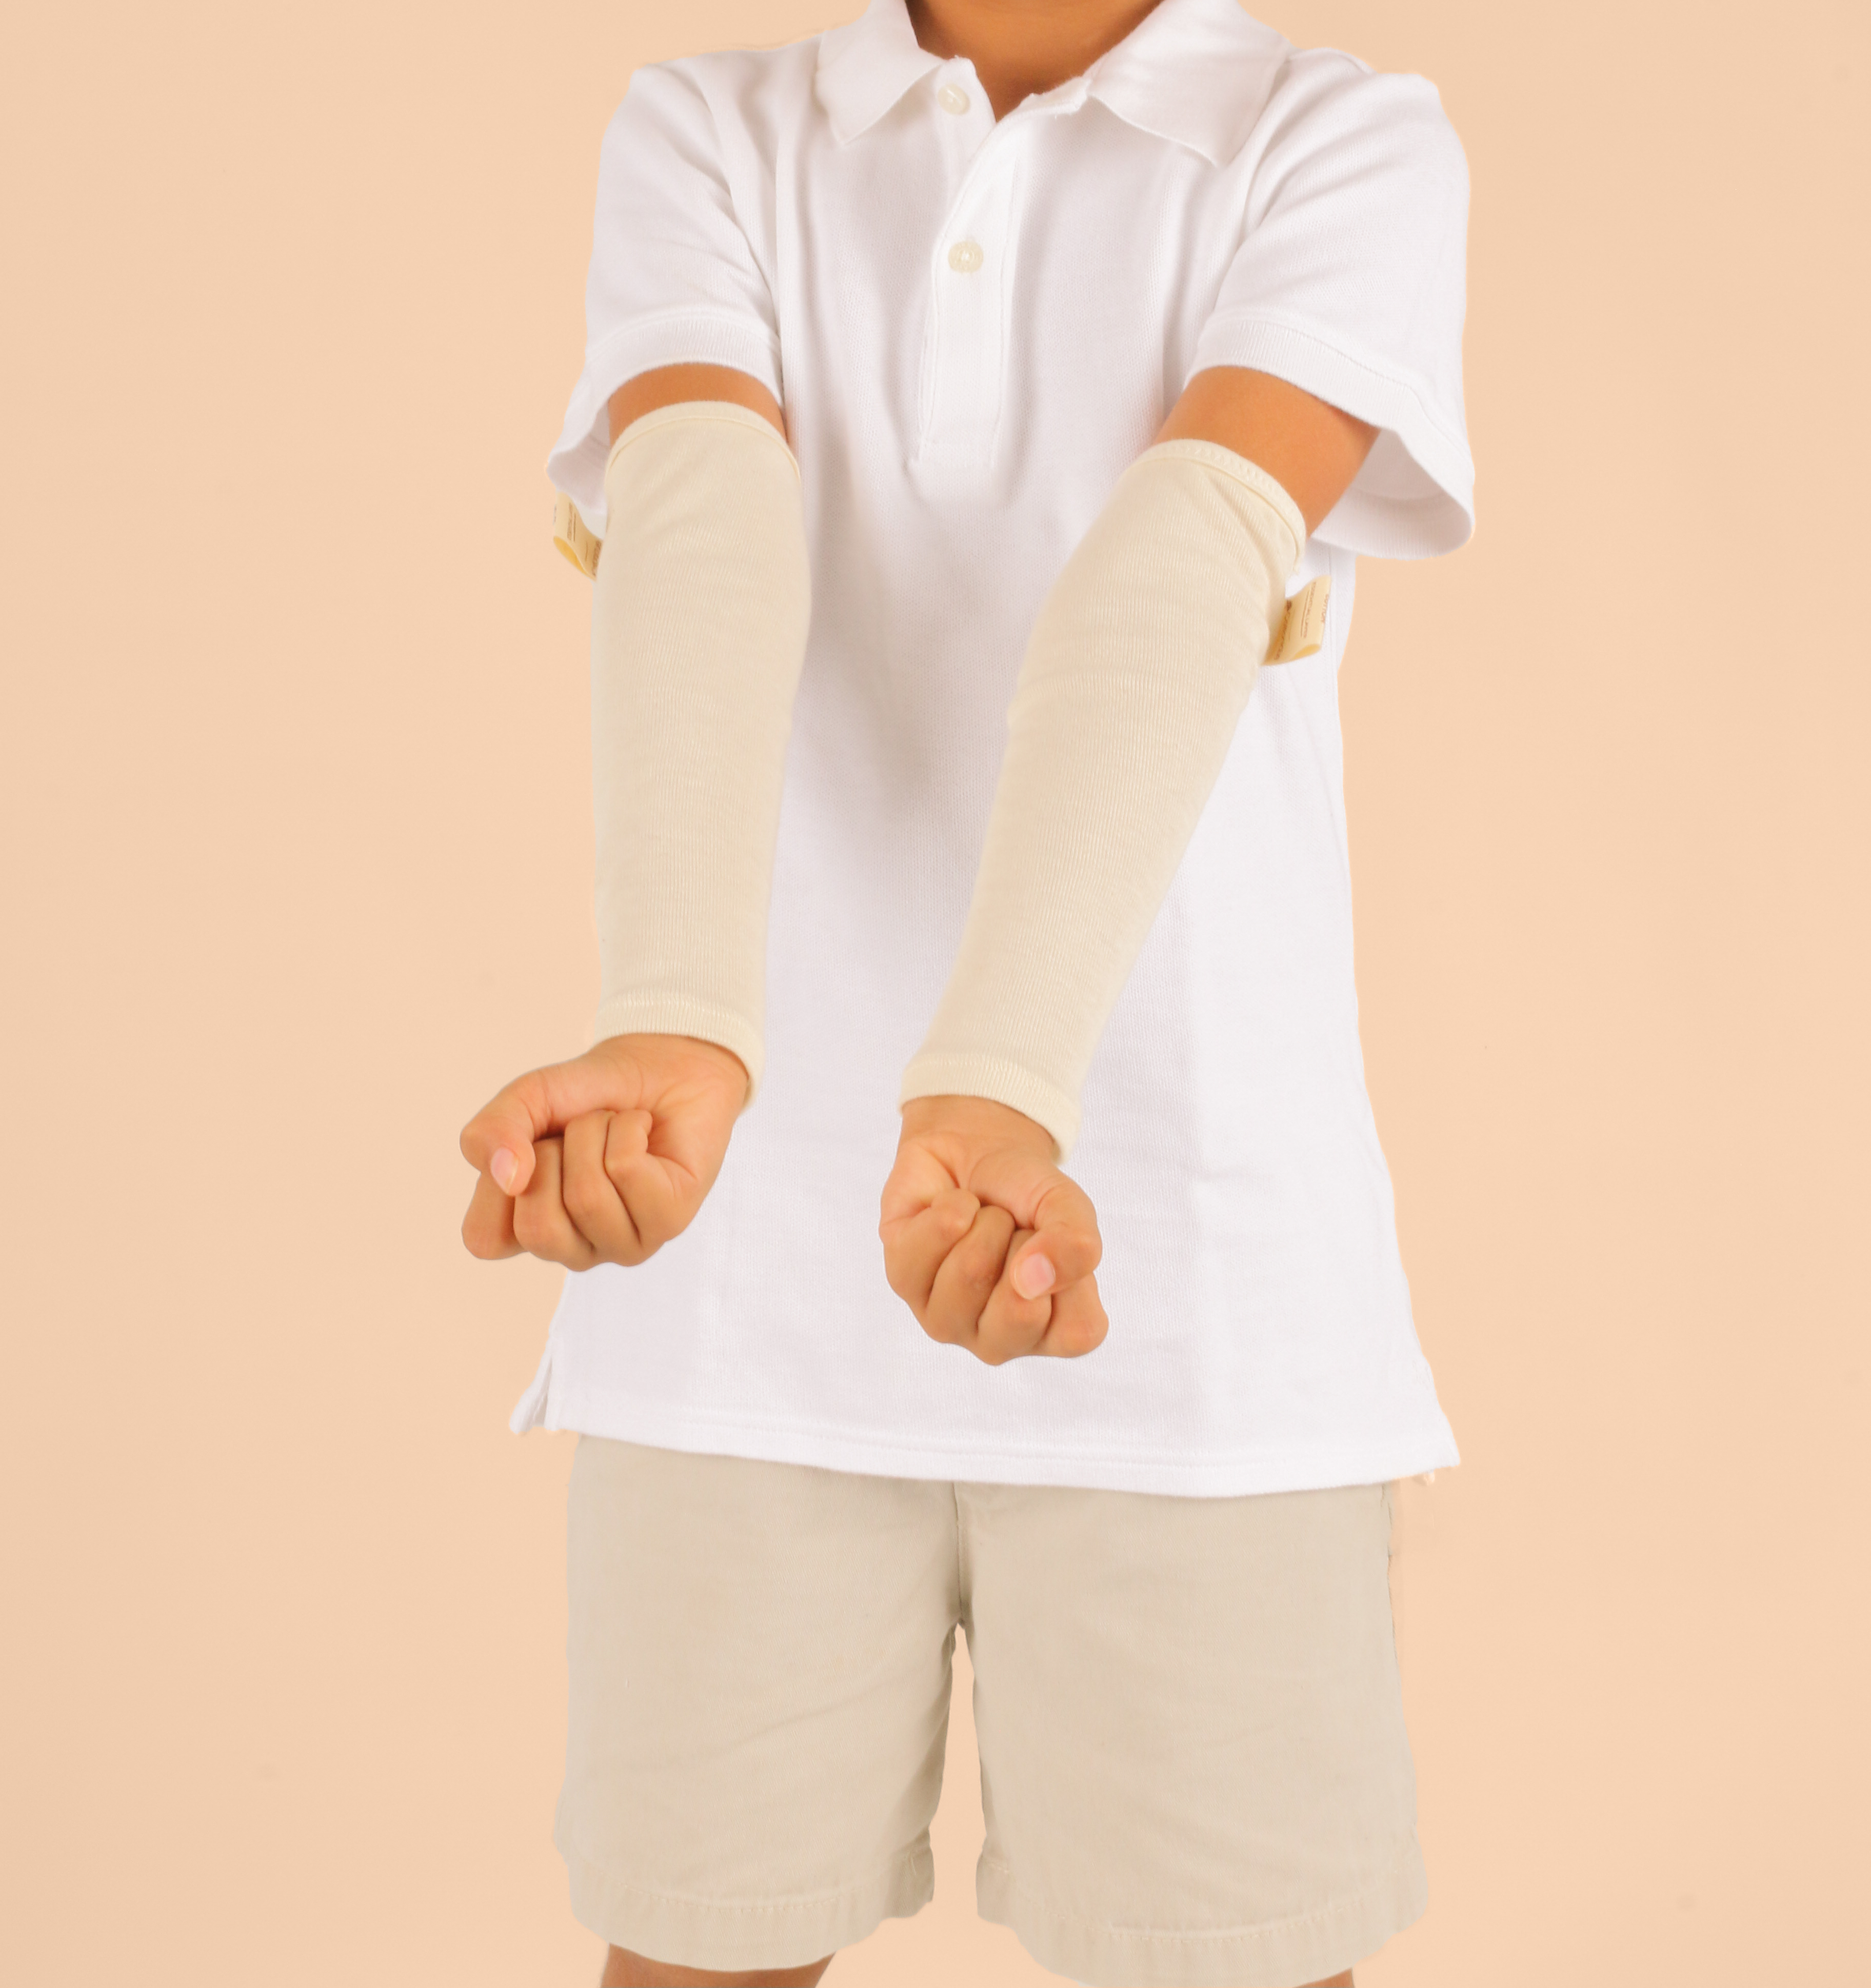 Allergy-Free Kid's Therapeutic Arm Sleeve